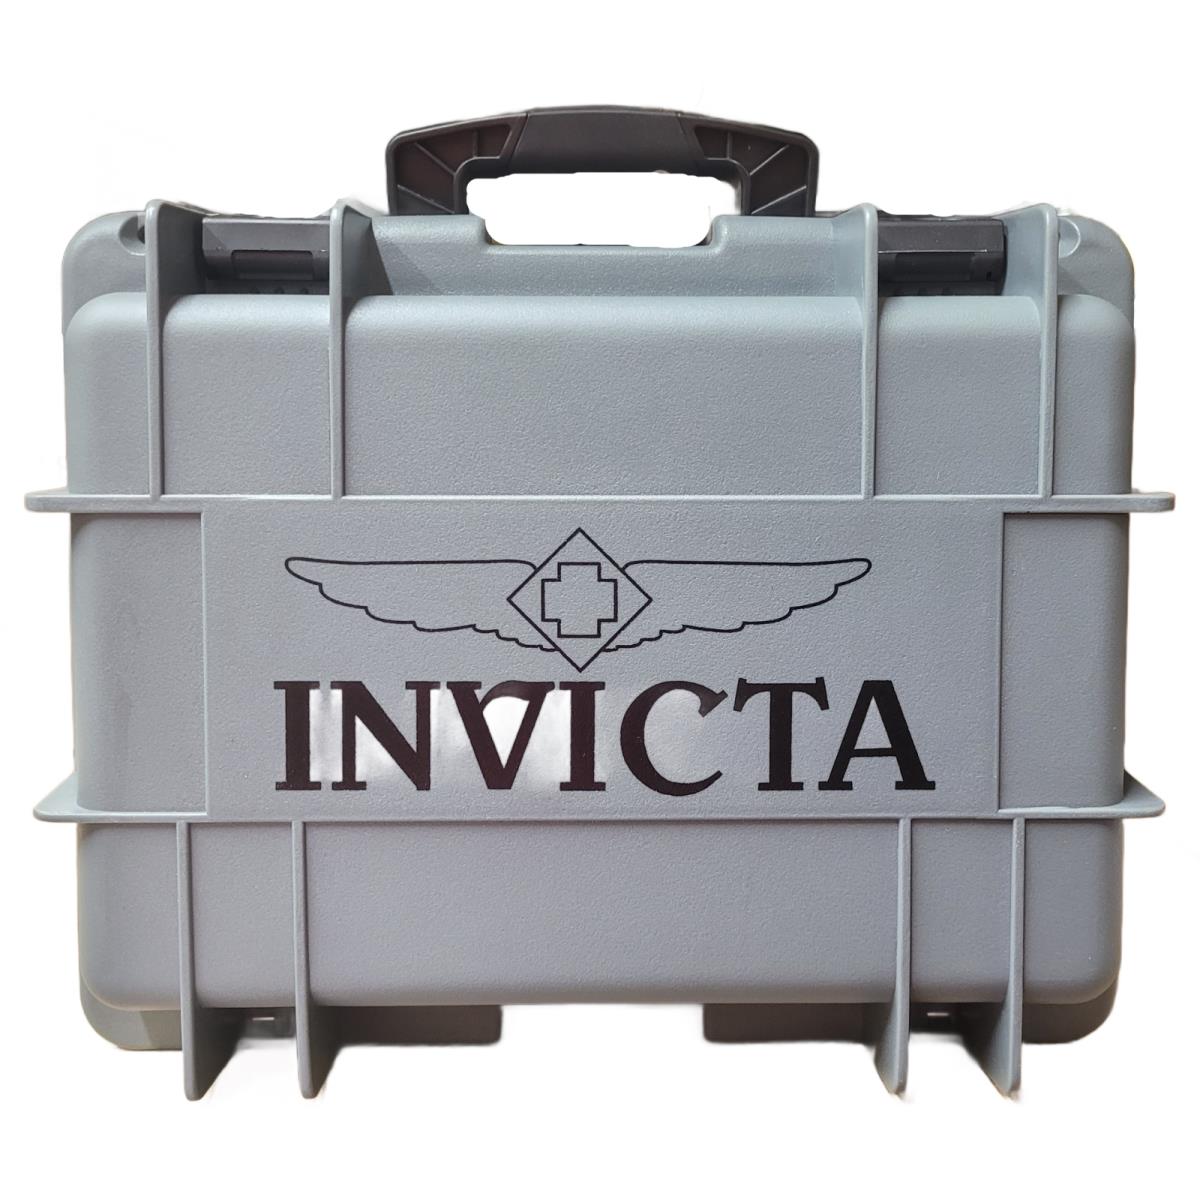 Invicta Grey/black One Slot Watch Box Protector Dive Case W/ 3 Flashlight Slots - Black, Grey